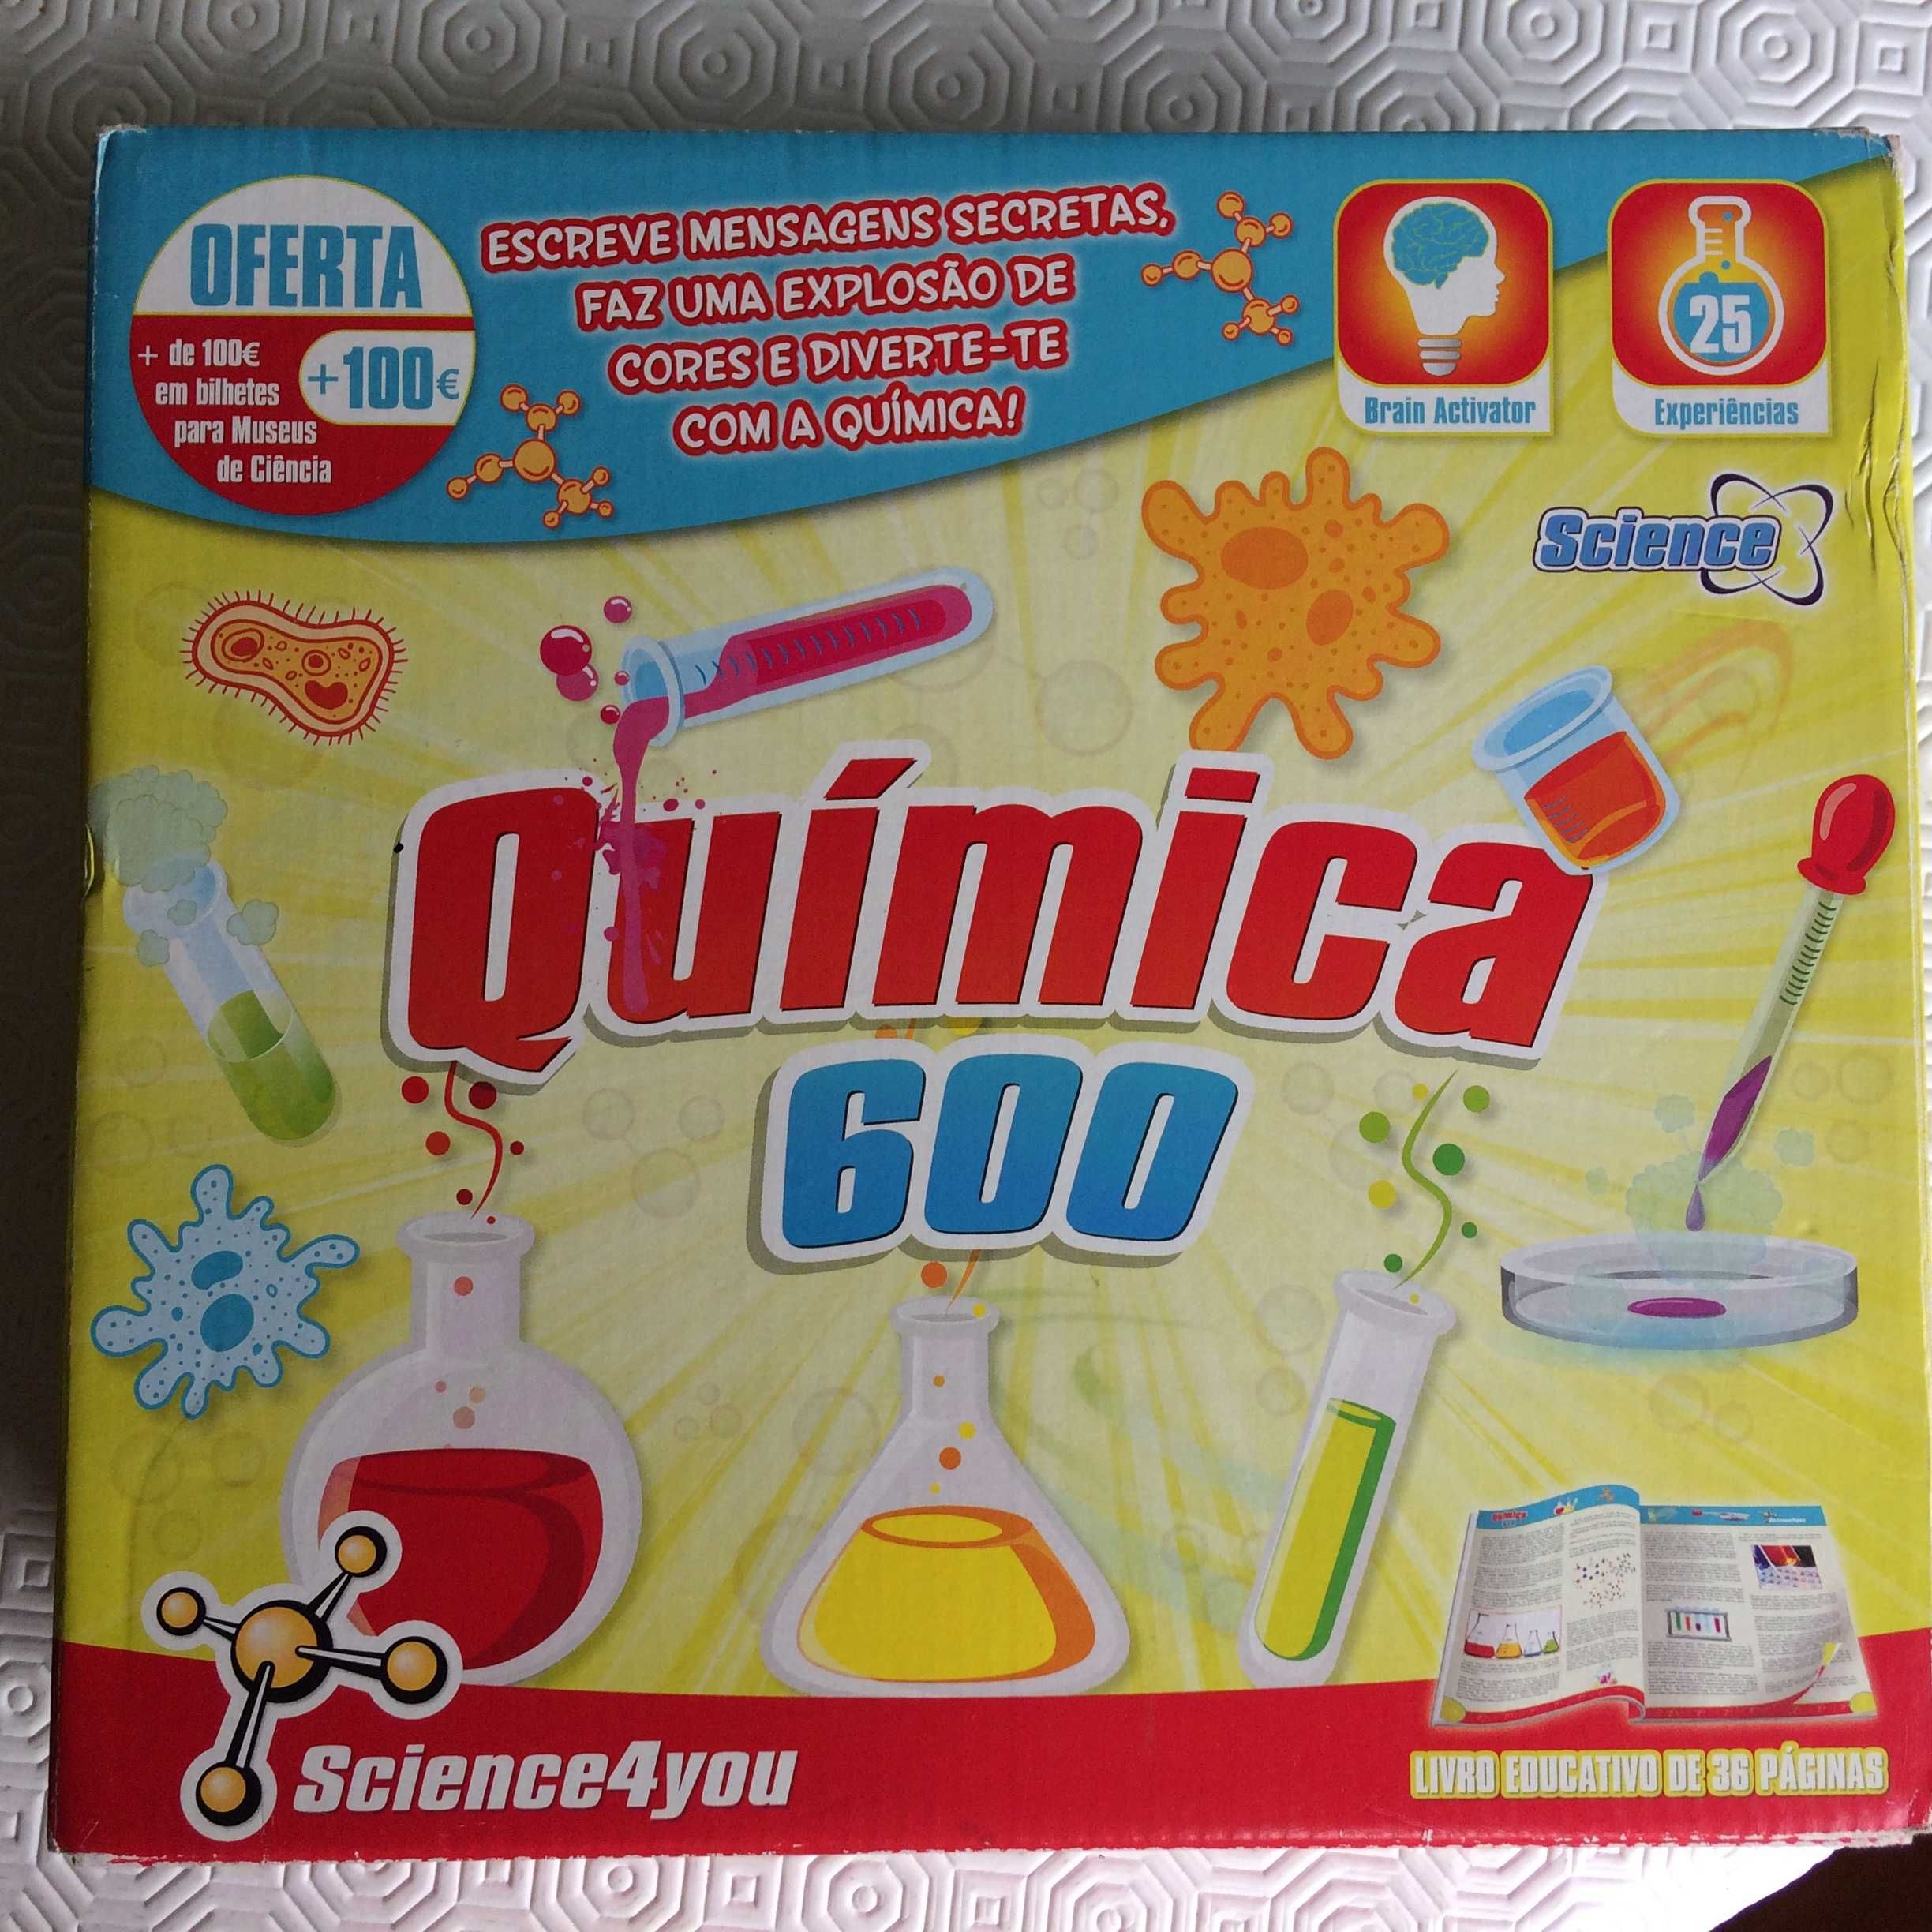 Science4you - Quimica 600 - Novo